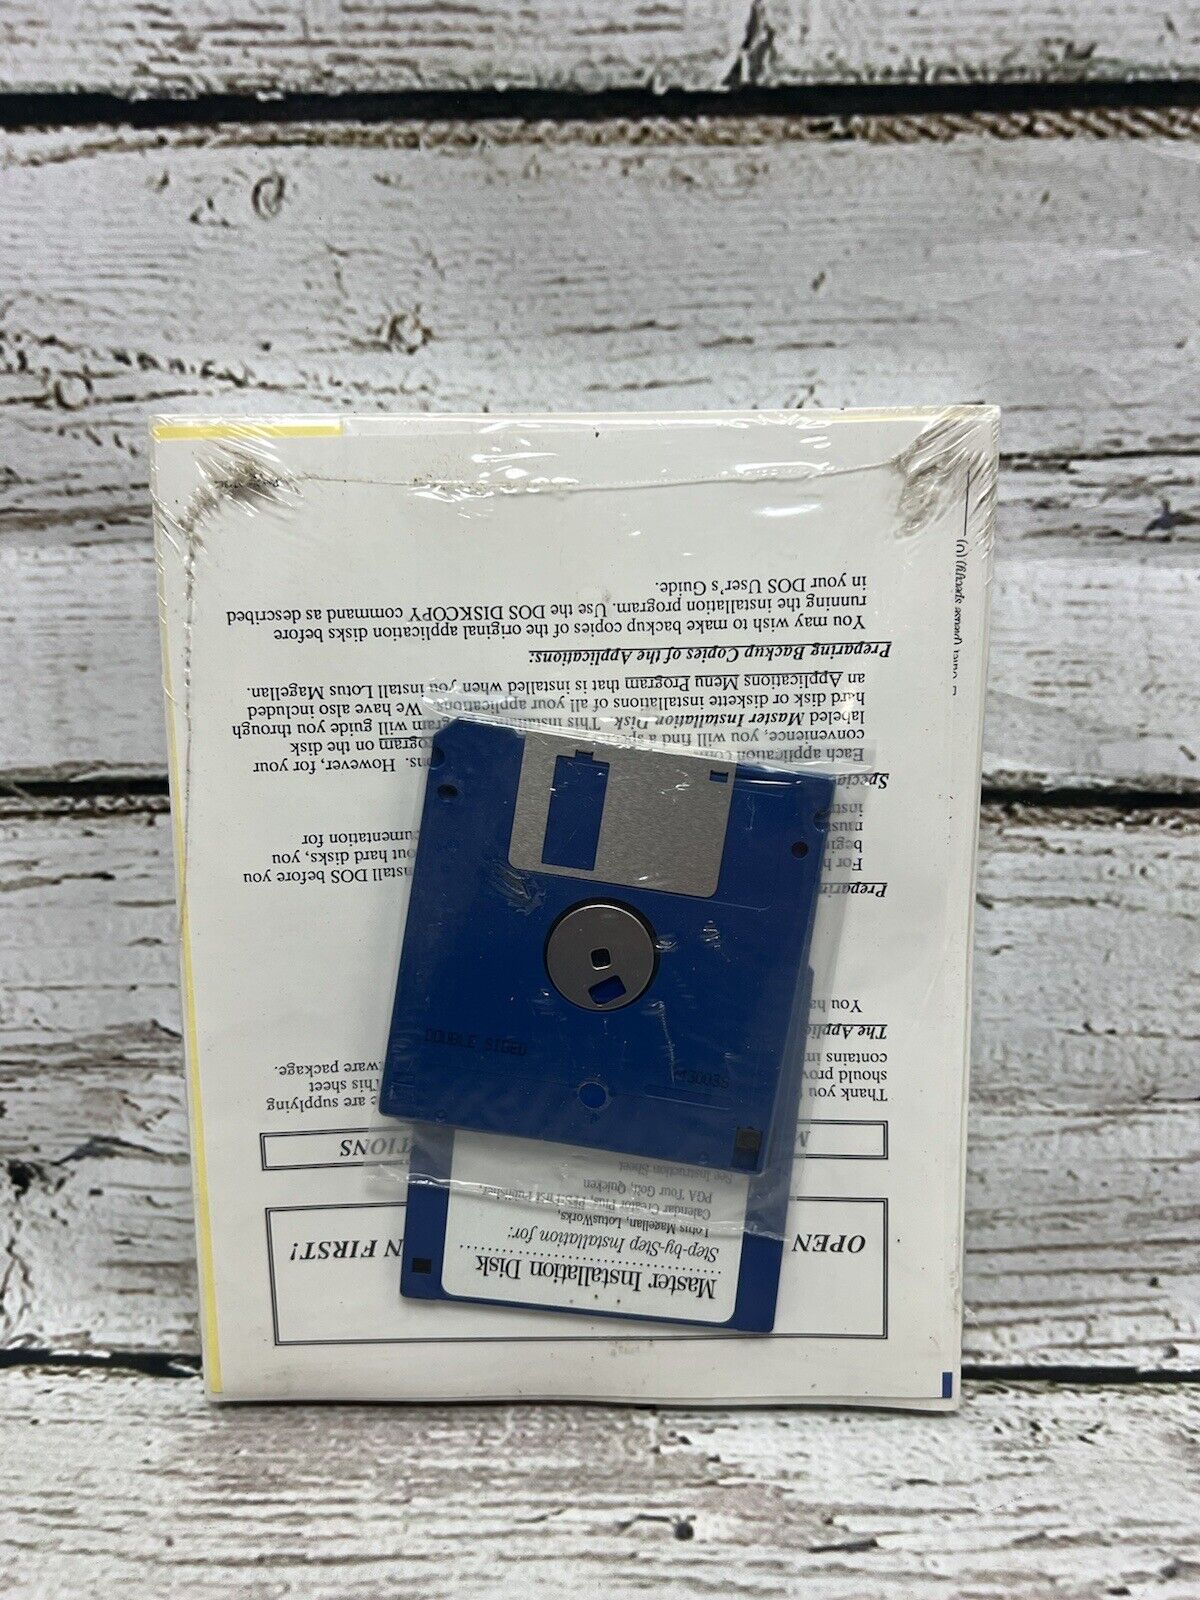 VTG Lotus Magellan 2.0 Quick Launch Explorers Guide Idea Book Floppy Disk NEW